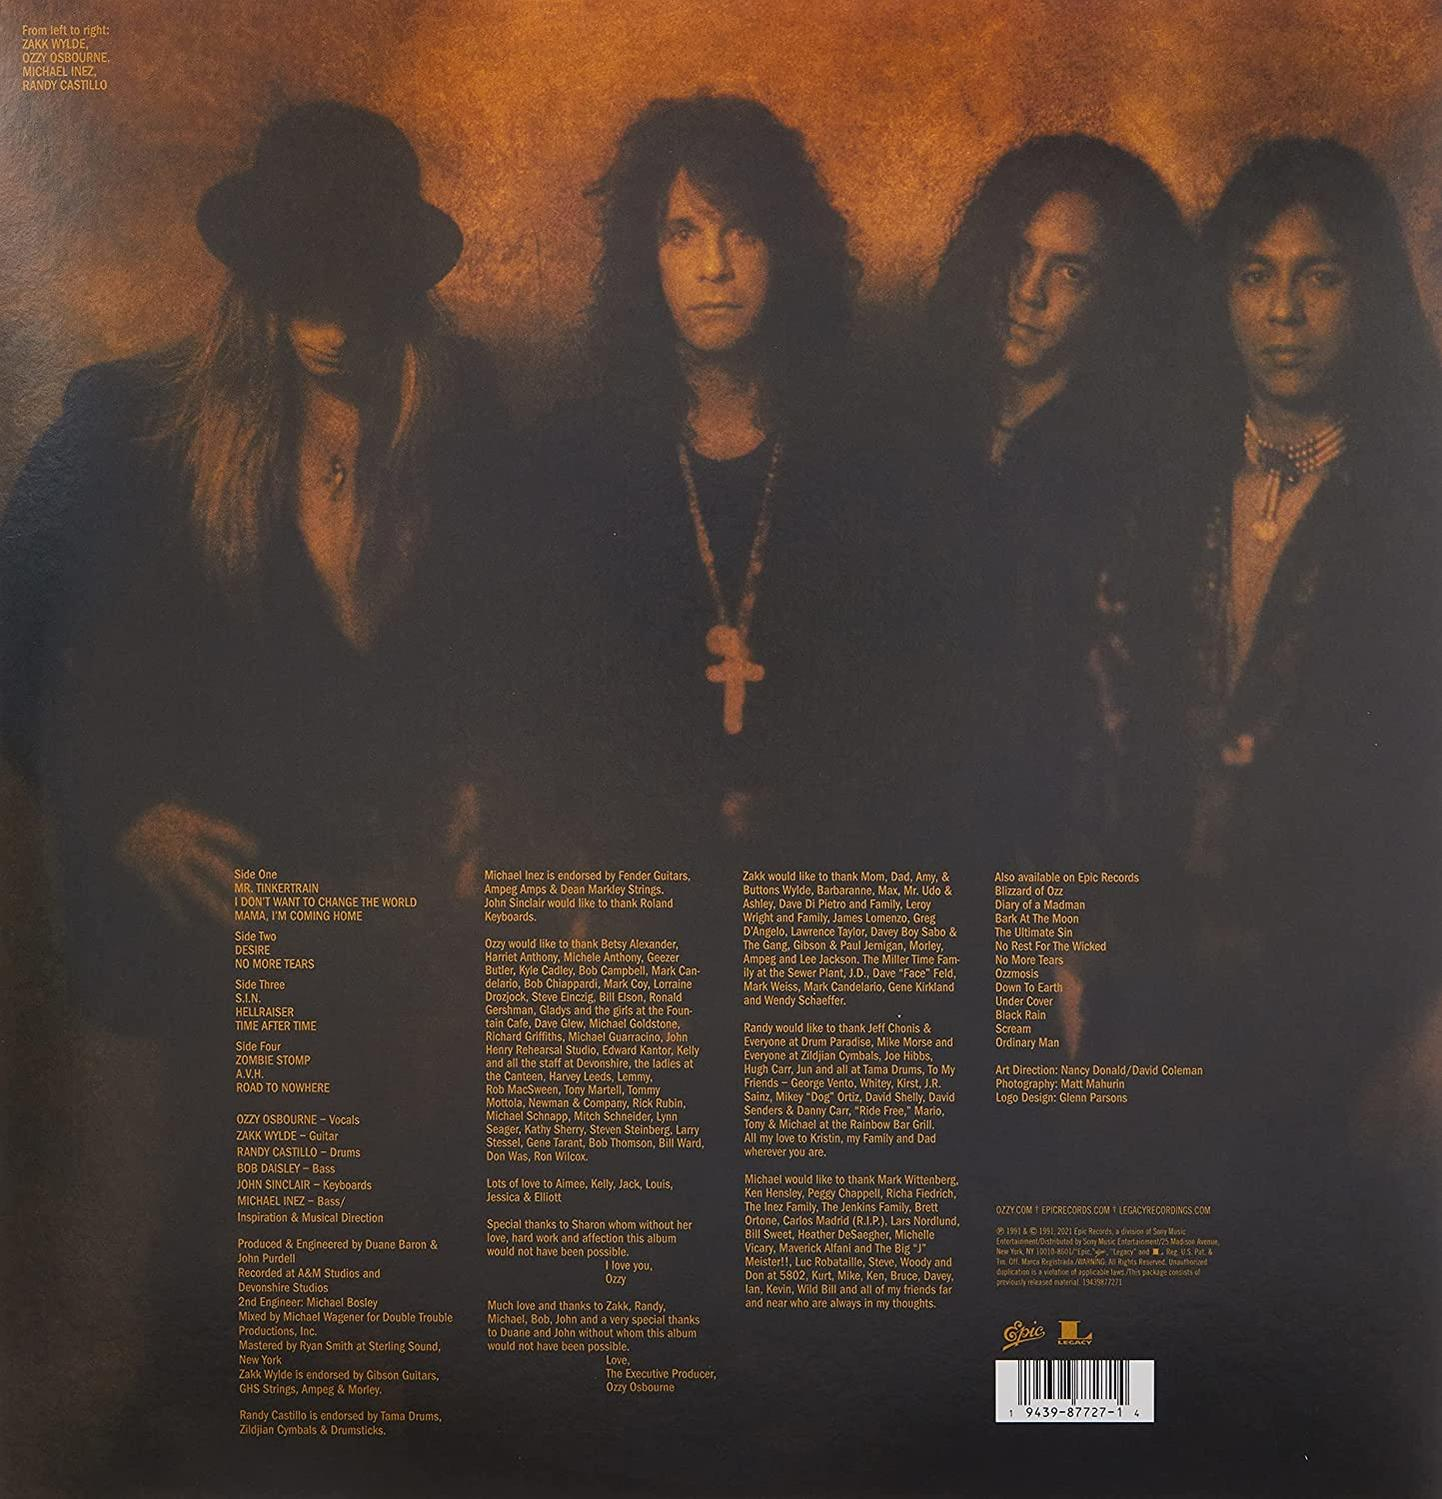 Tears No Ozzy Osbourne - - (Vinyl) More